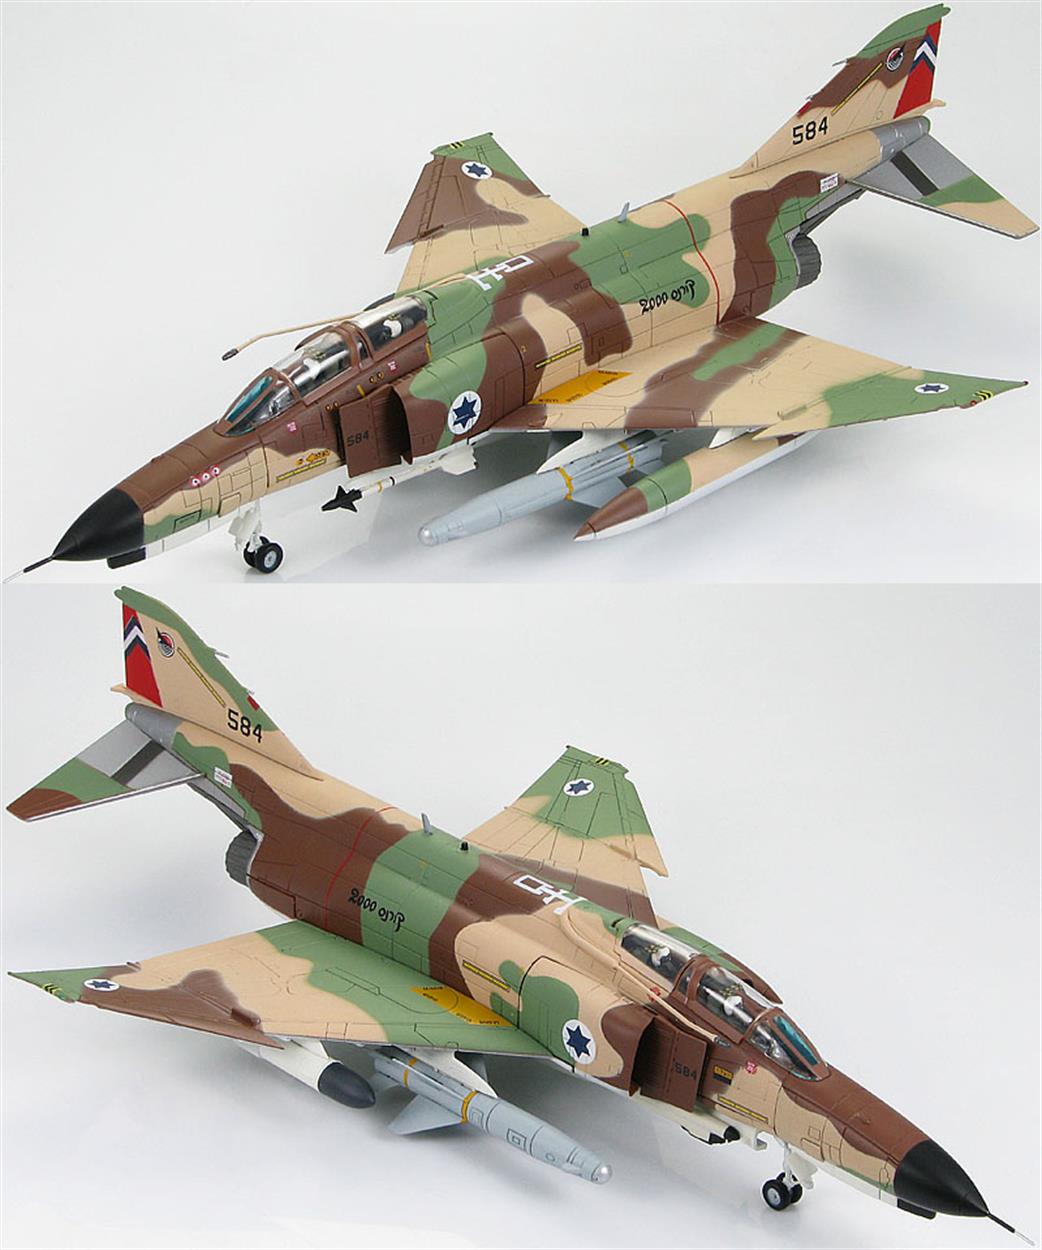 Hobby Master HA1939 F-4E Kurnass 2000 s/n 584 201st Sqn Israel Air Force 1970s 1/72